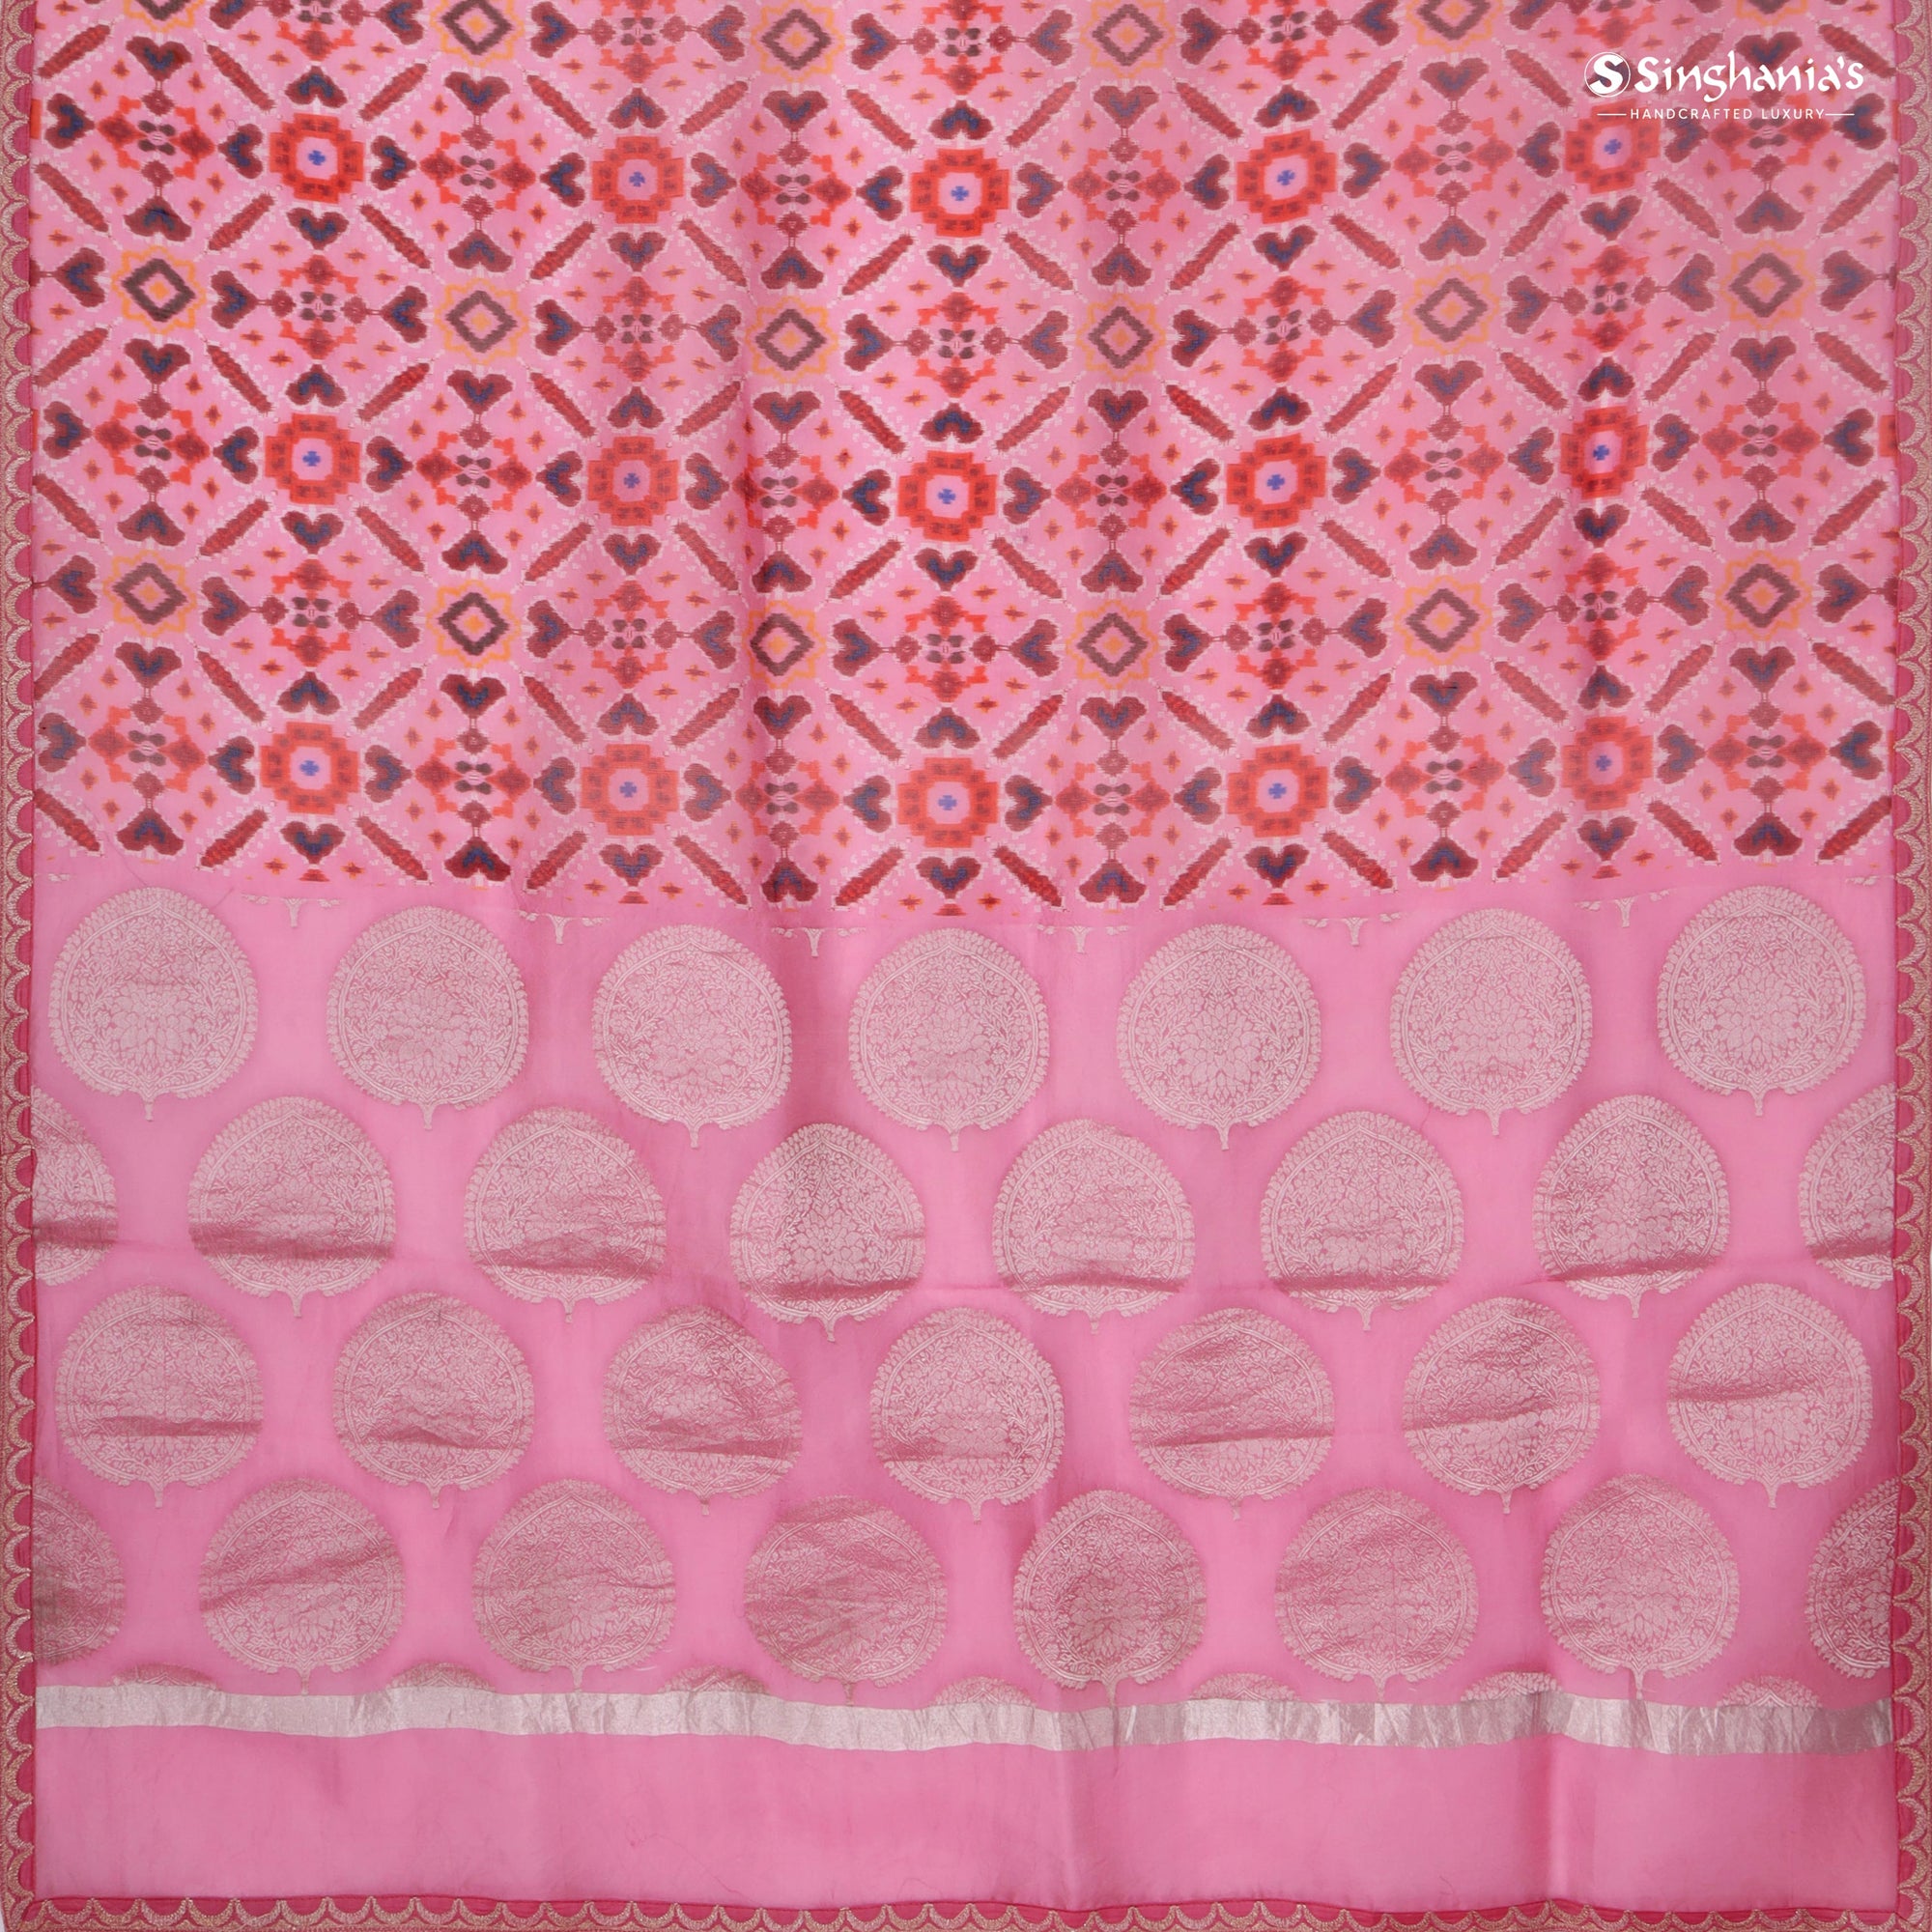 Flamingo Pink Printed Organza Saree With Embroidery